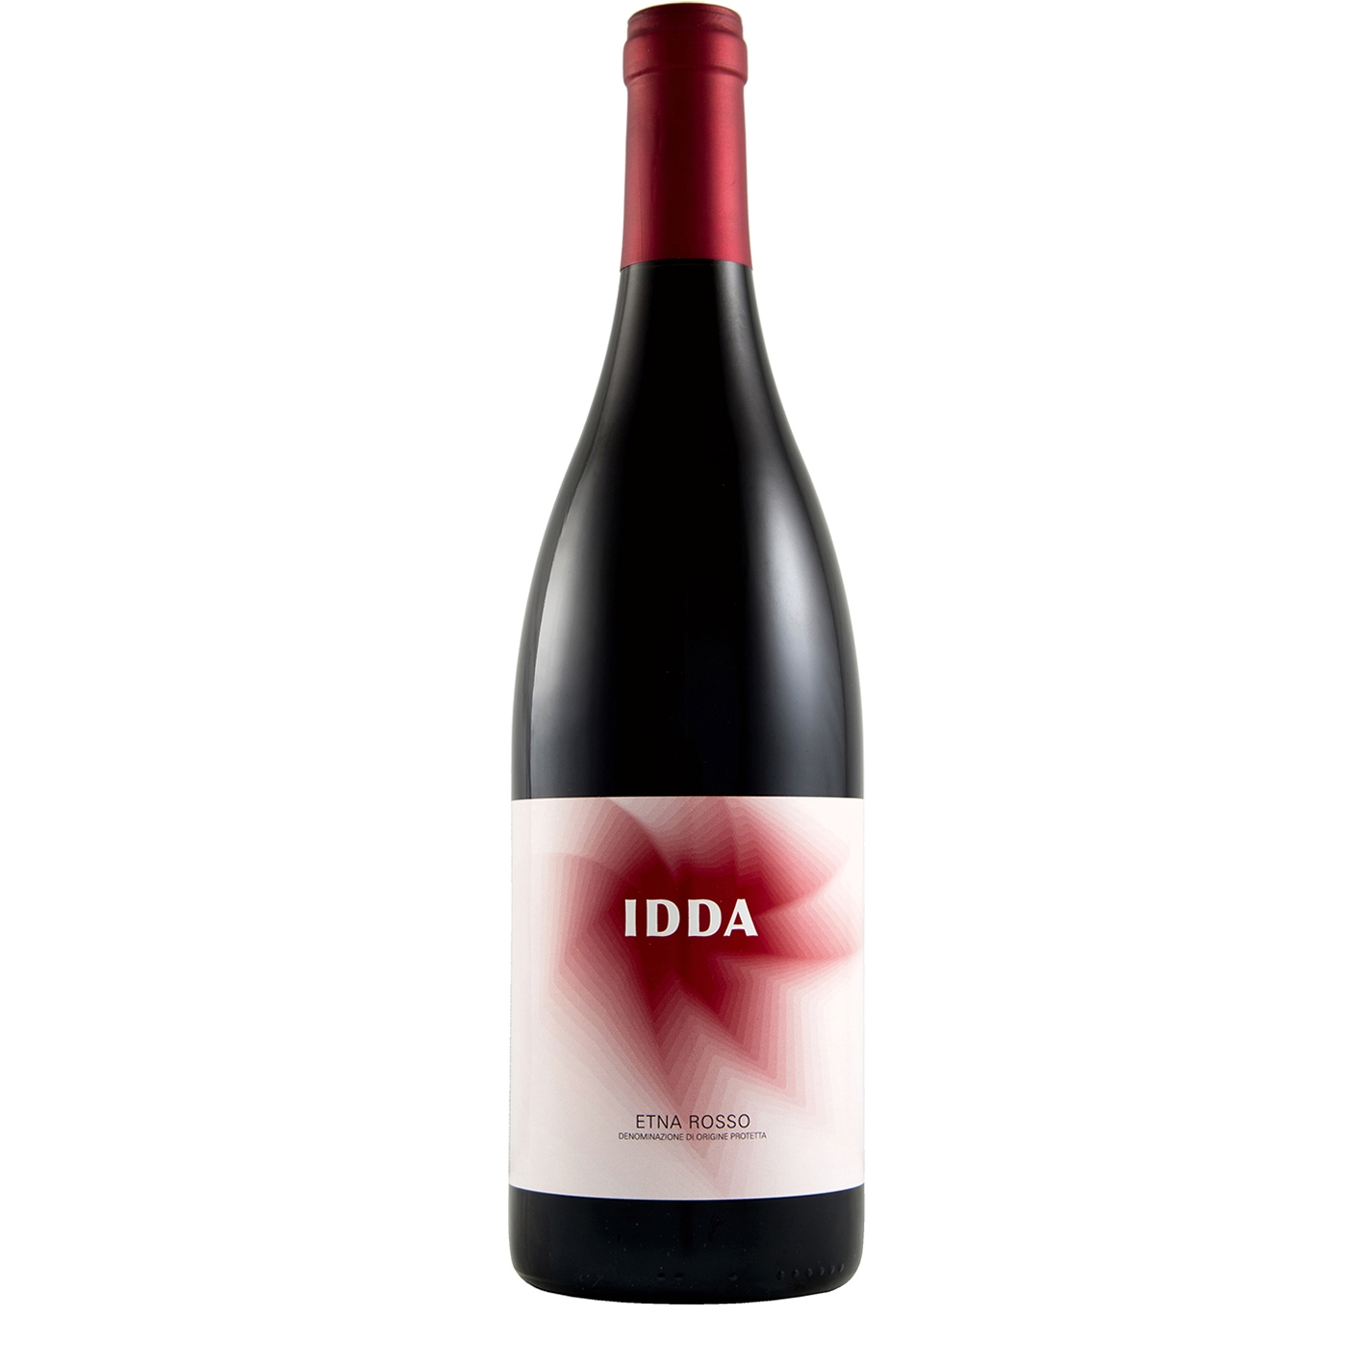 Graci Idda Etna Rosso 2019 Red Wine